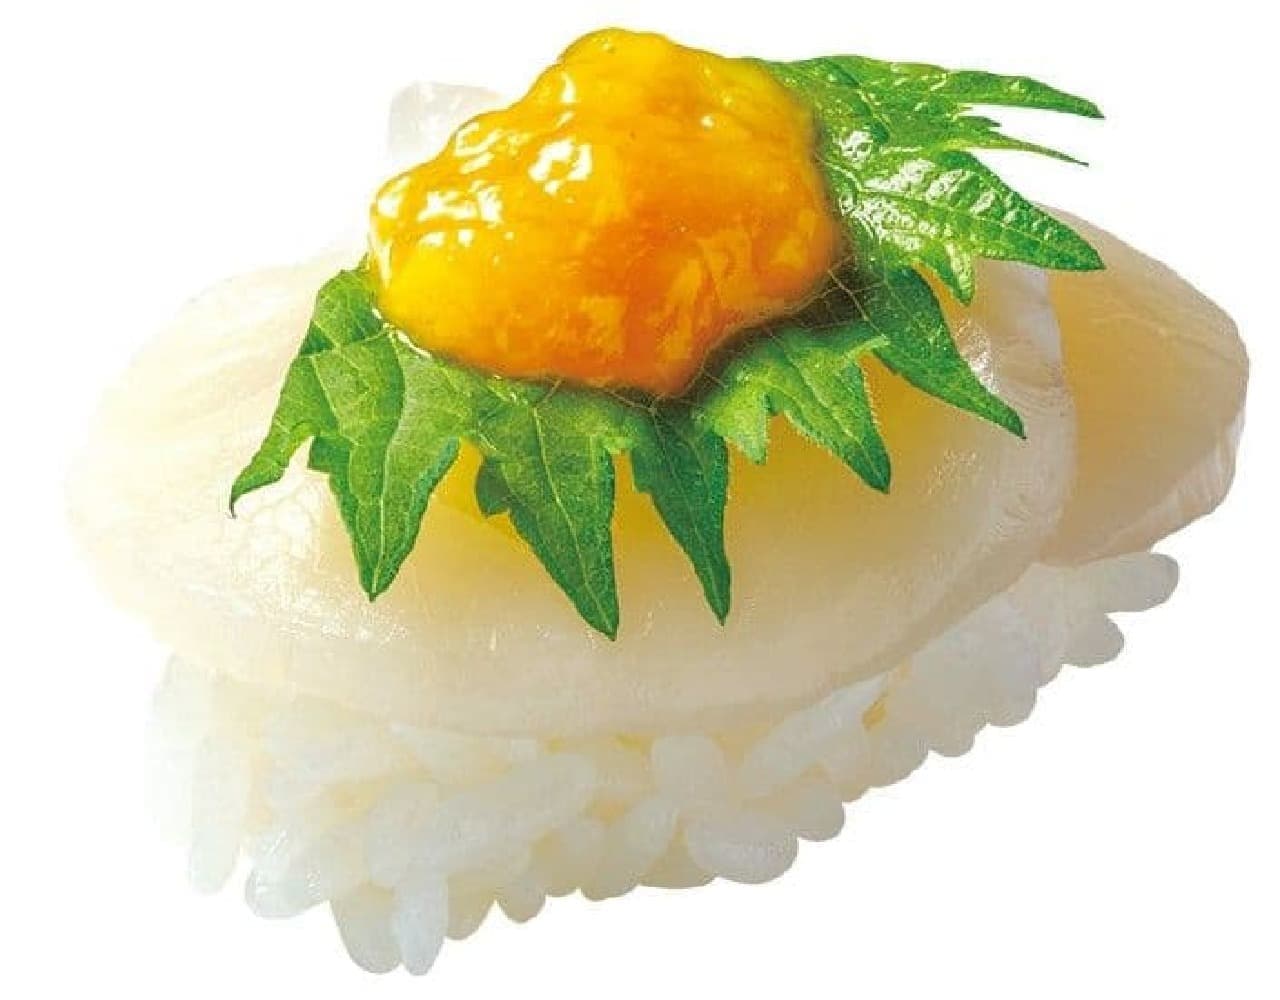 Hama Sushi "Scallops - sea urchin with special jellied sea urchin